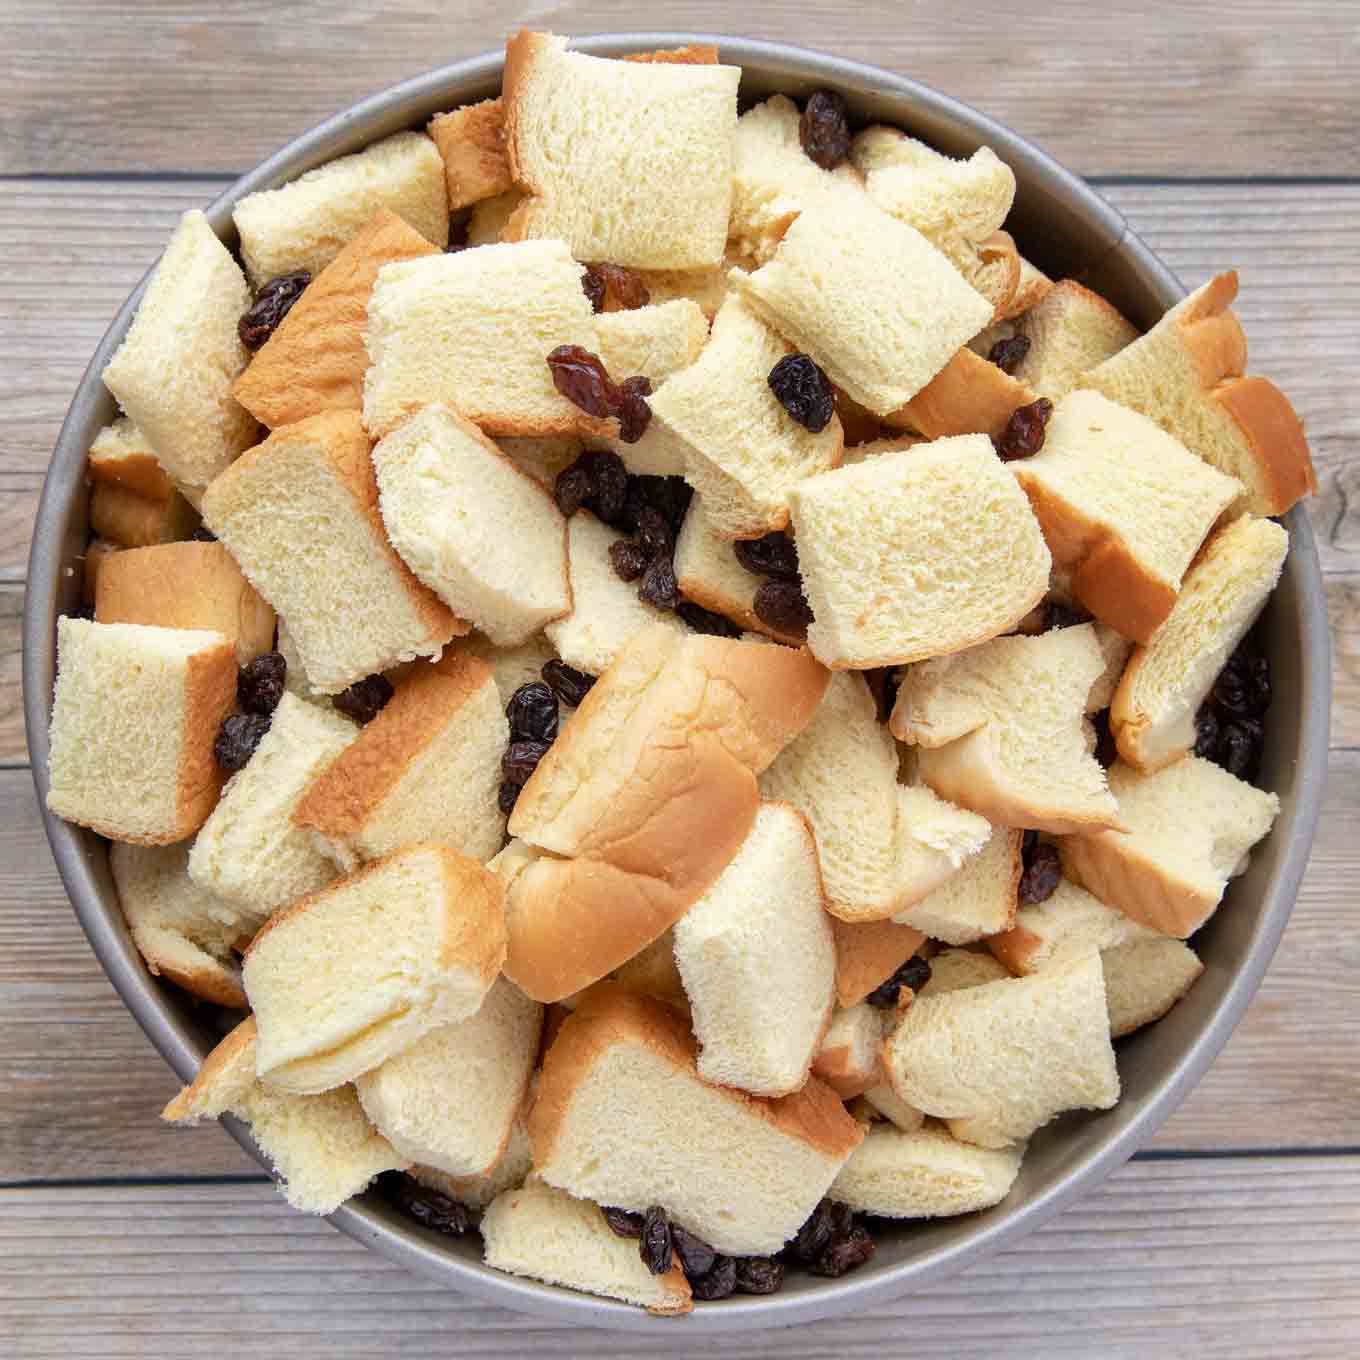 bread cubes and raisins in a springform pan